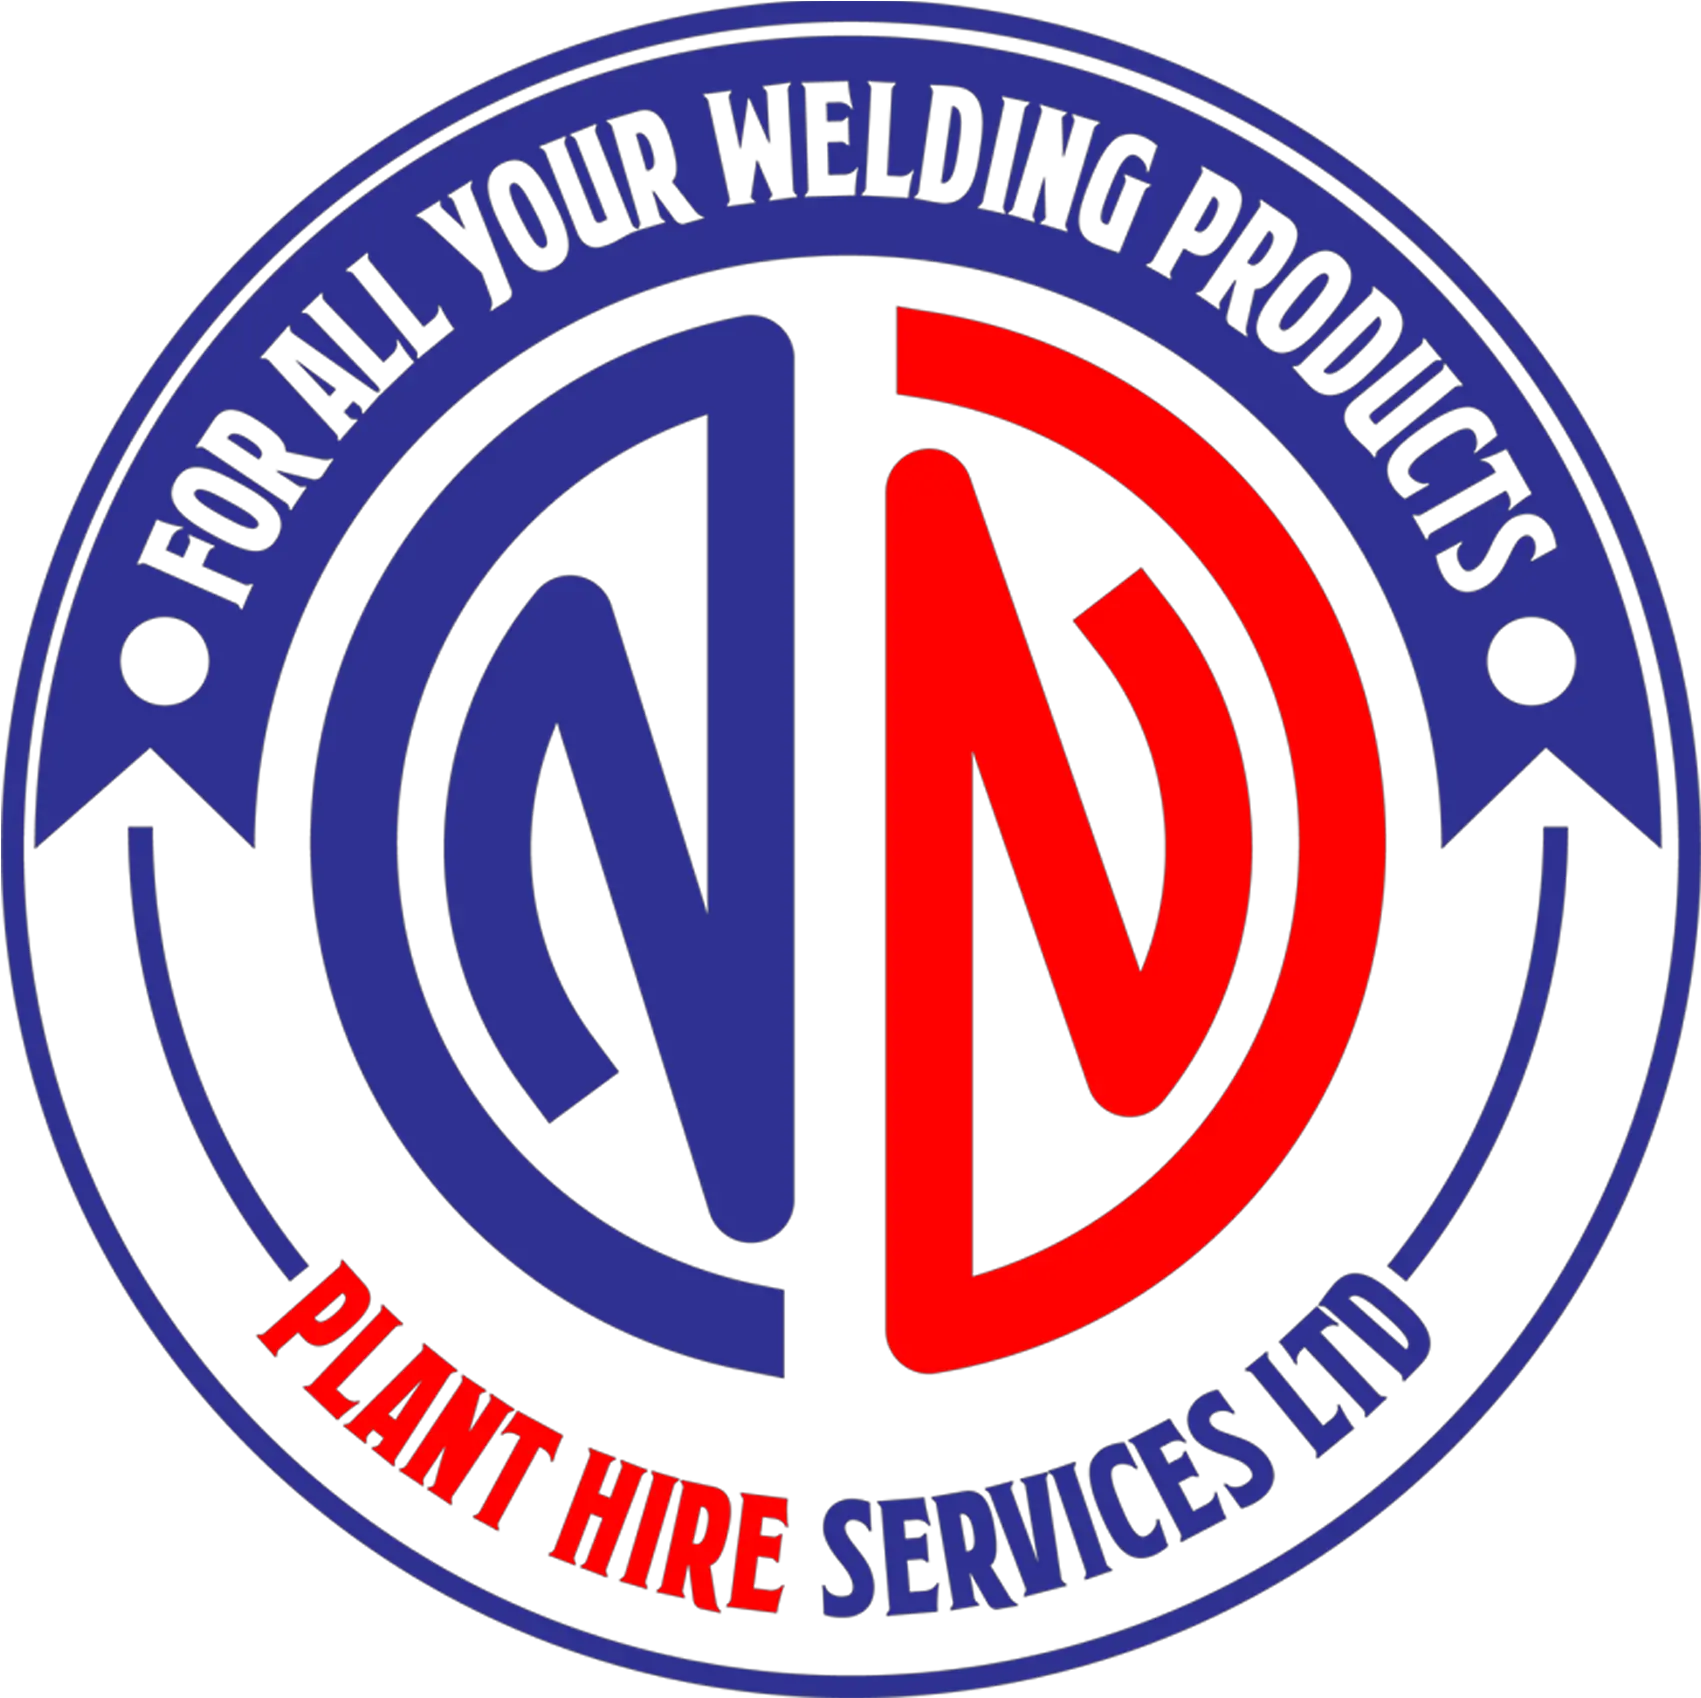 Welding Plant Hire Company Uk N U0026 Services Ltd Circle Png Welding Logo